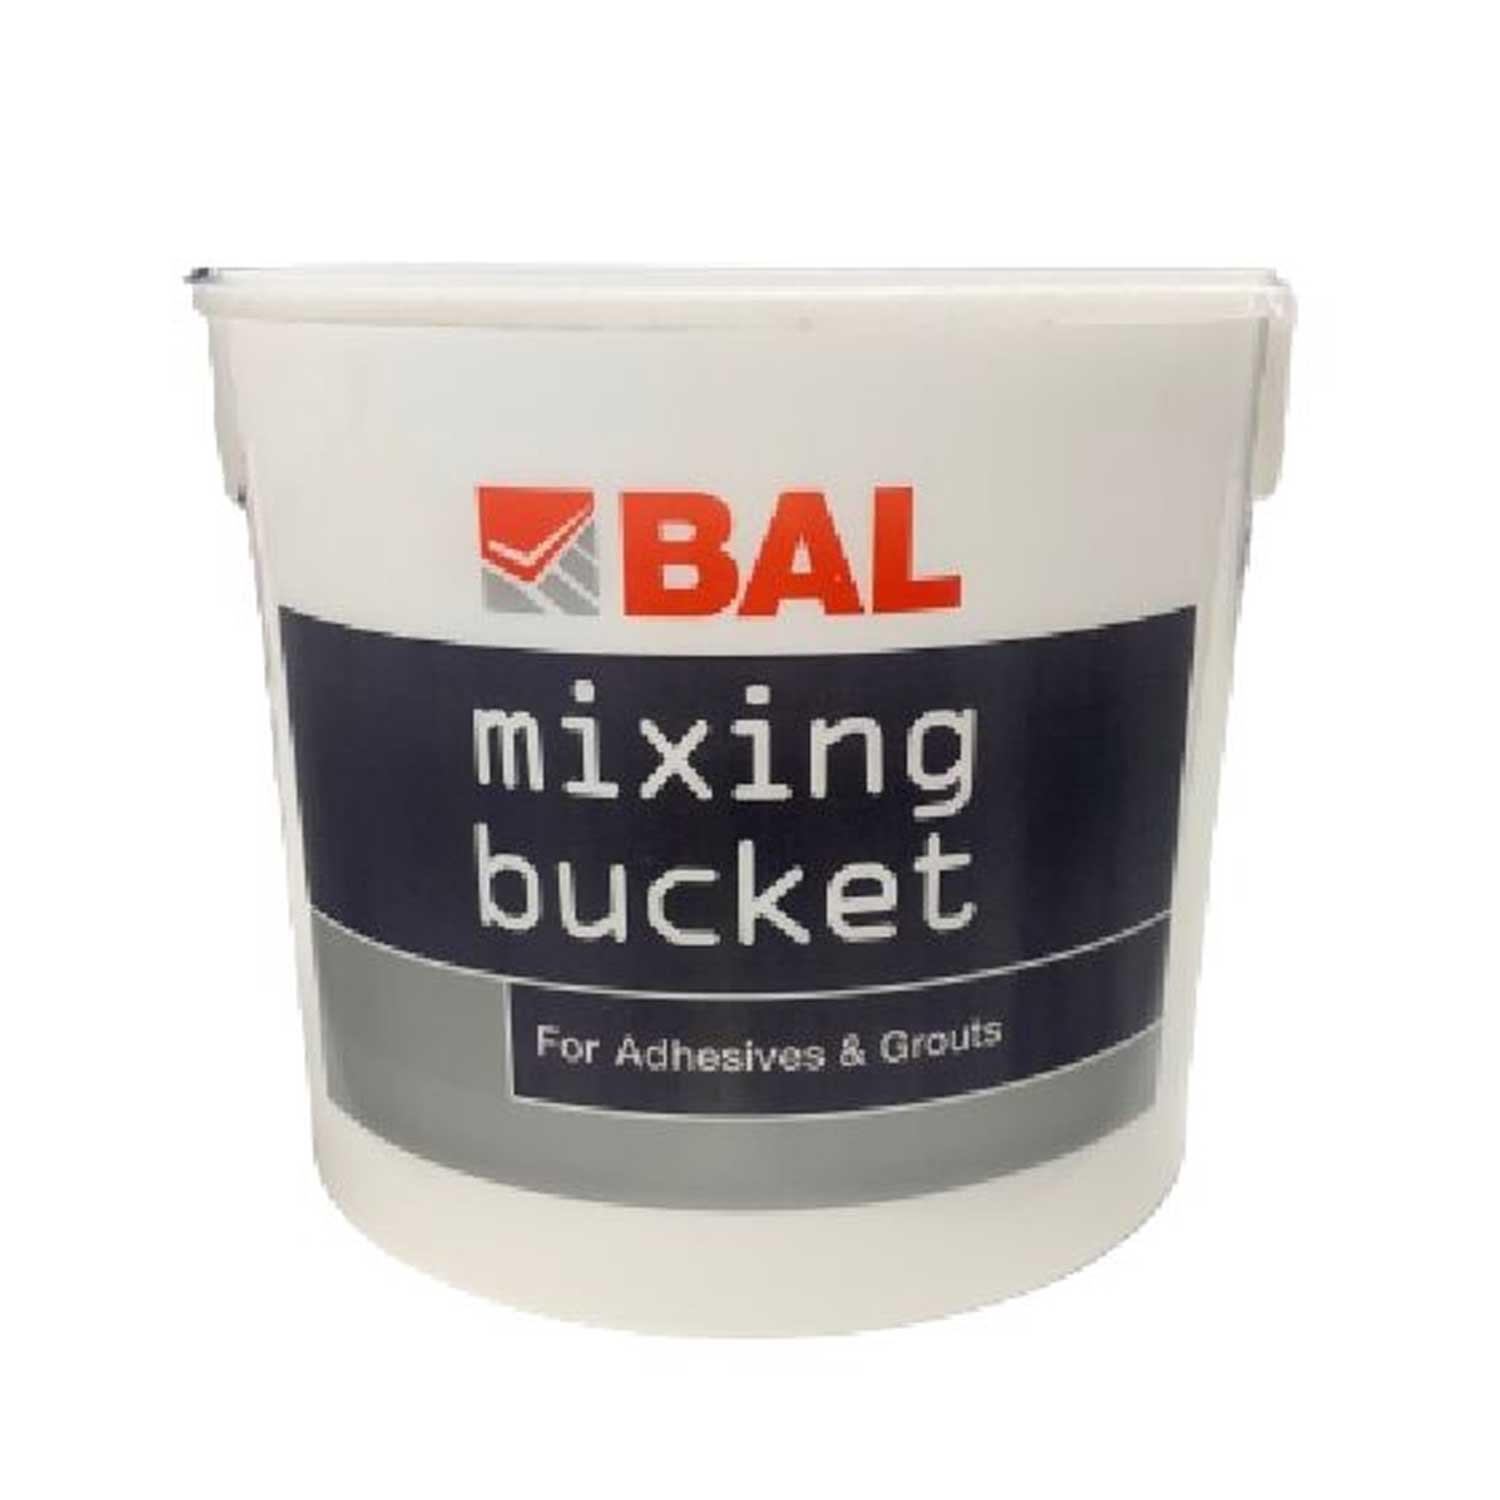 BAL Mixing Bucket - Adhesive Grout